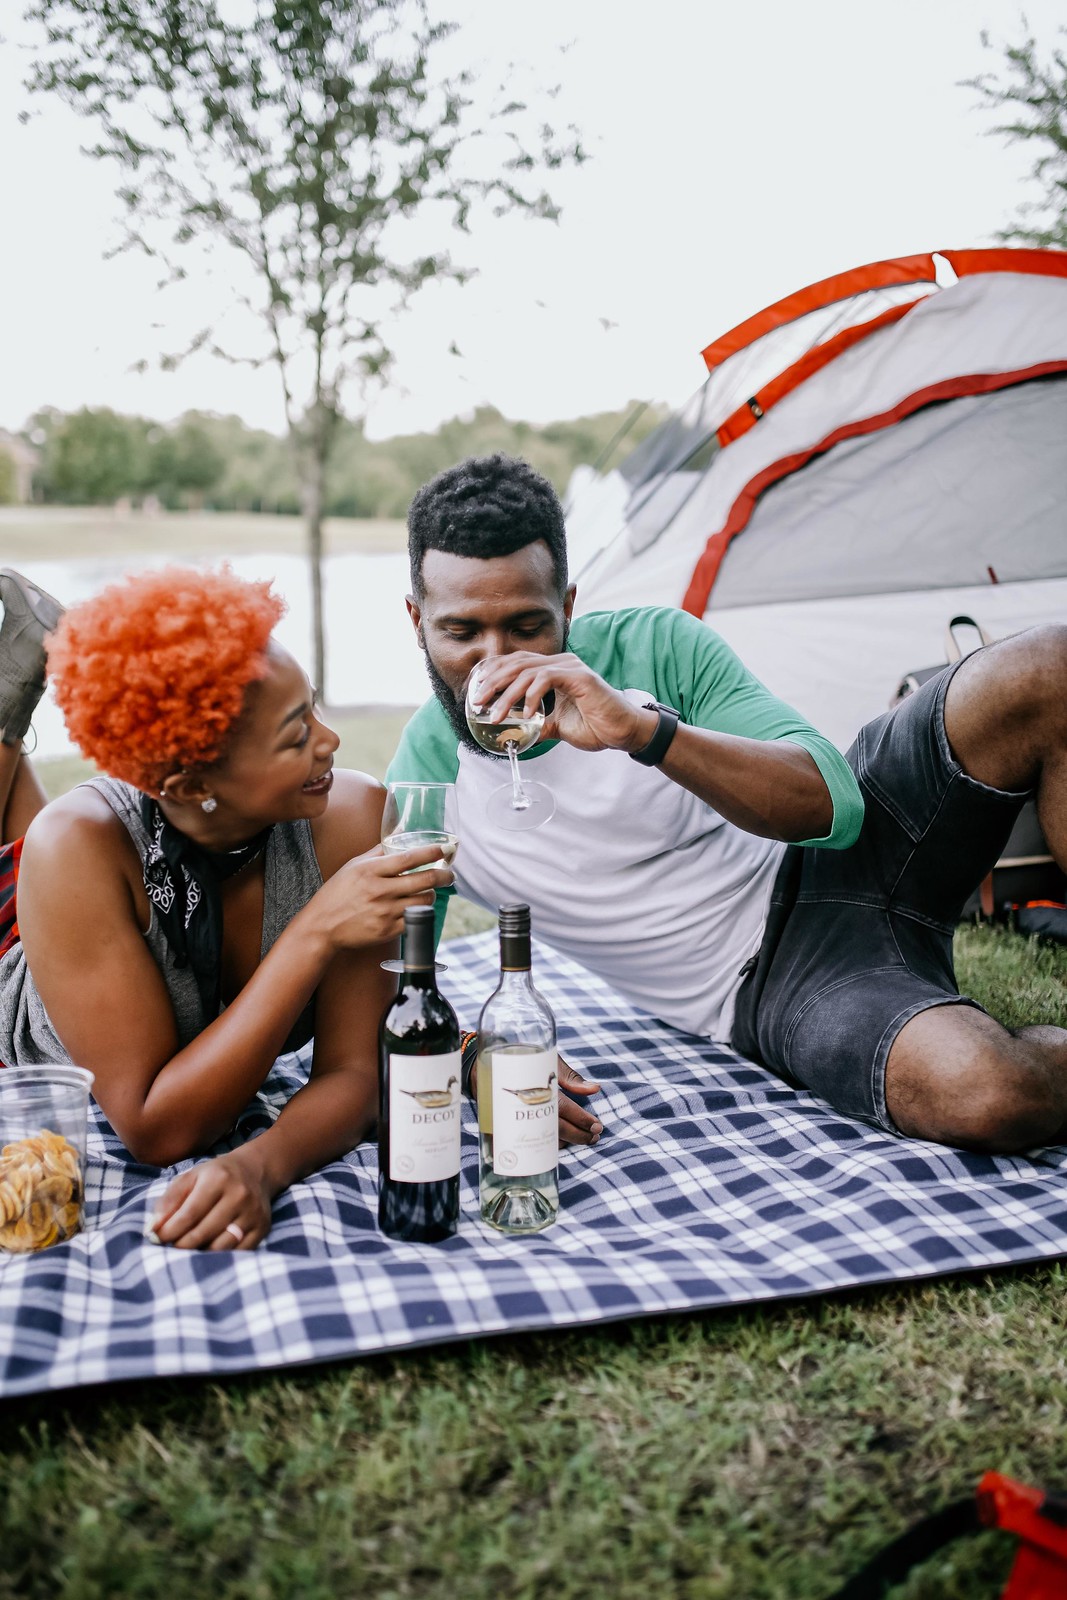 enjoy decoy wine while camping